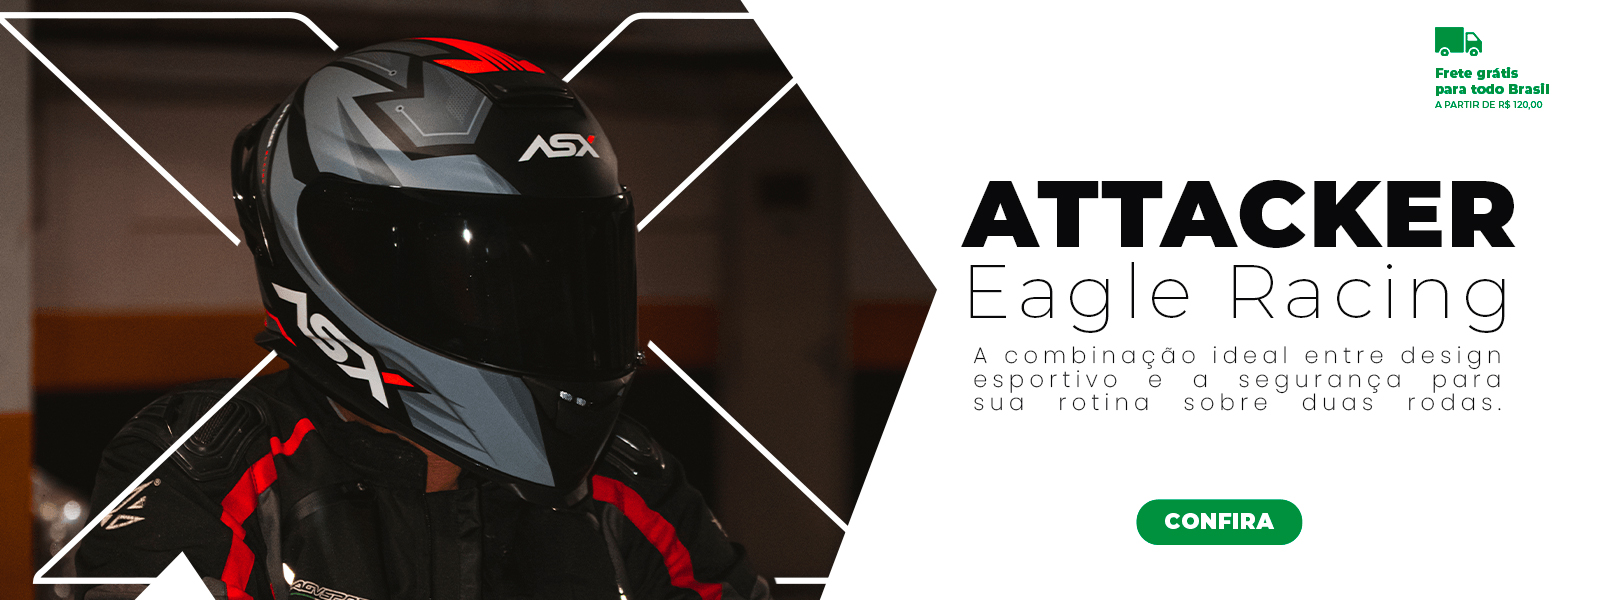 ASX Eagle Racing Attacker